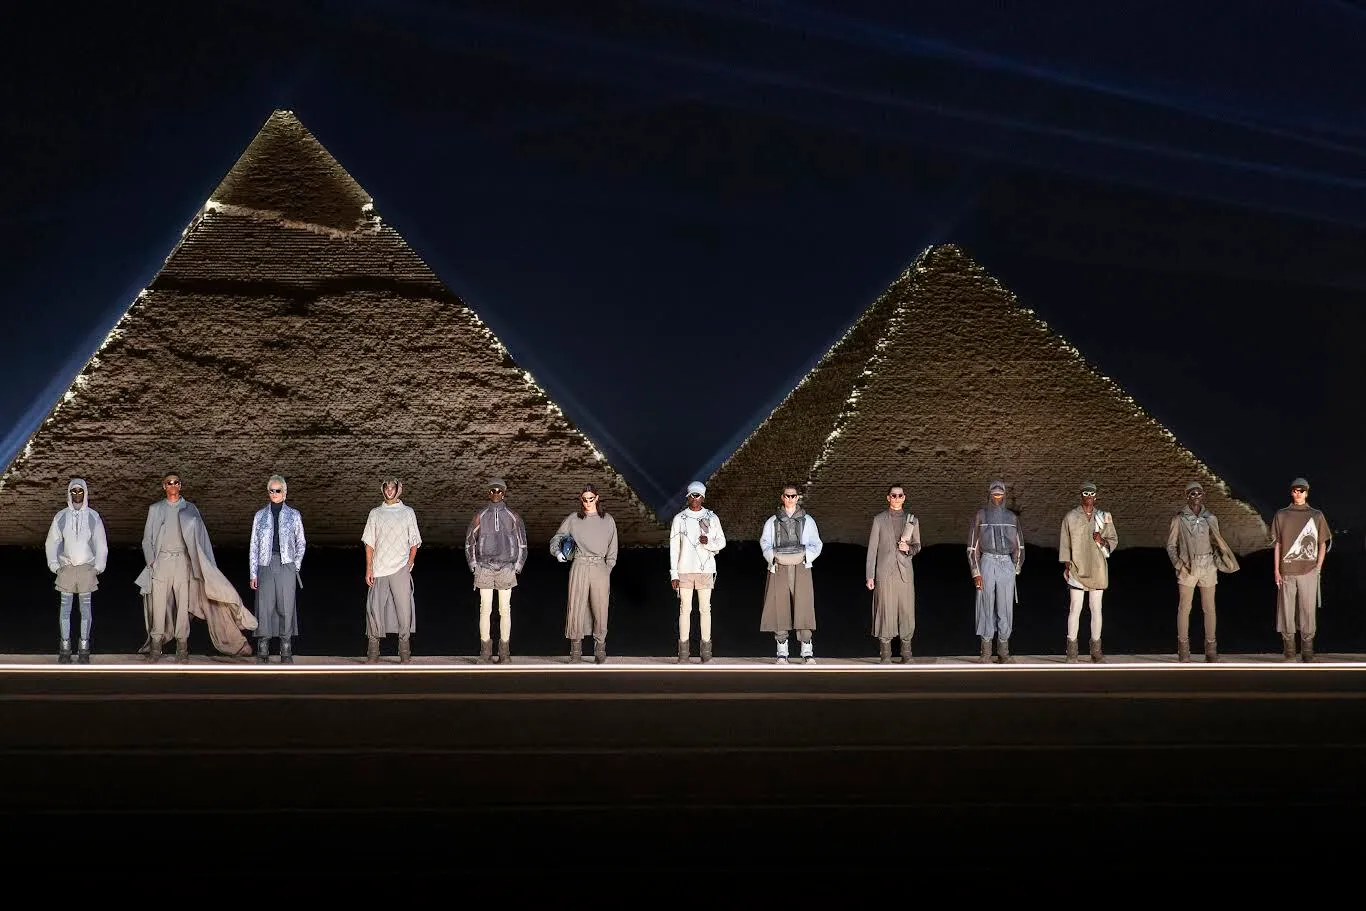 Dior fashion walk against the backdrop of Egyptian pyramids.